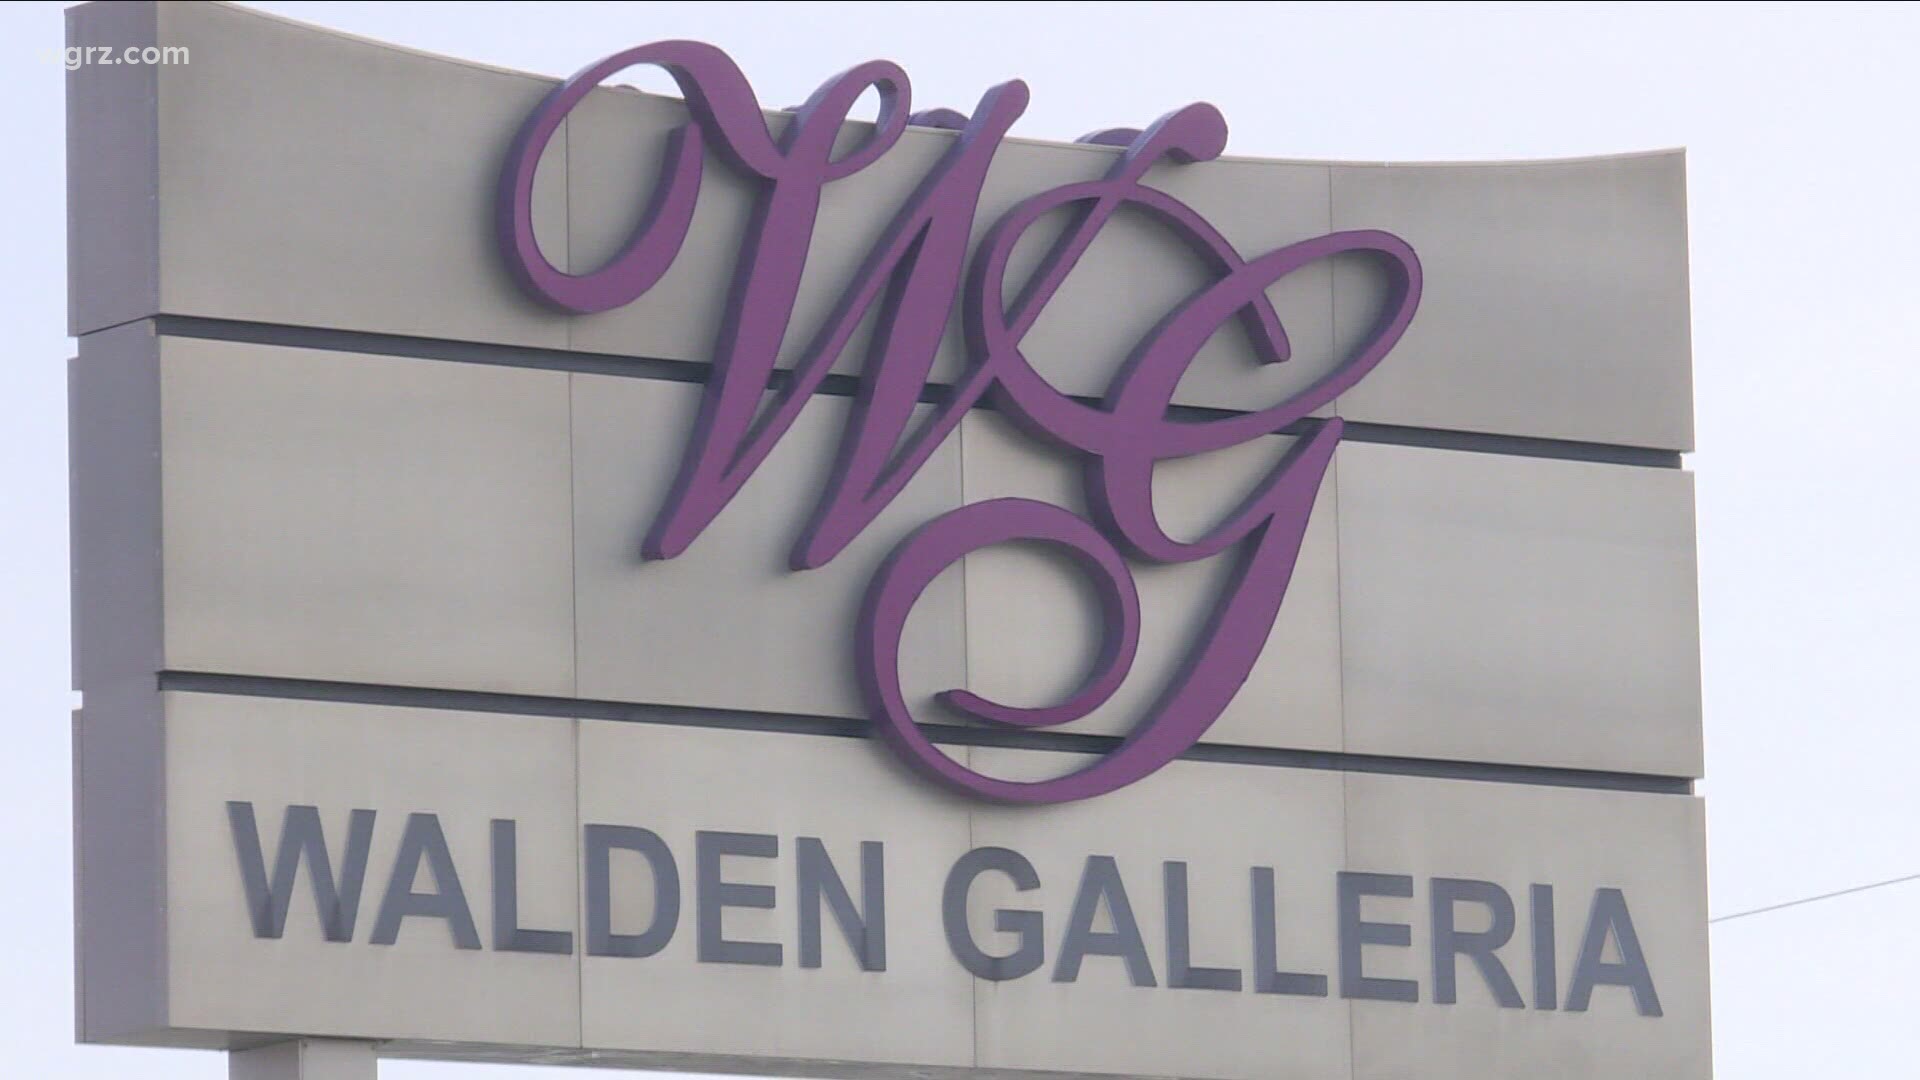 Walden Galleria expands hours starting next Monday